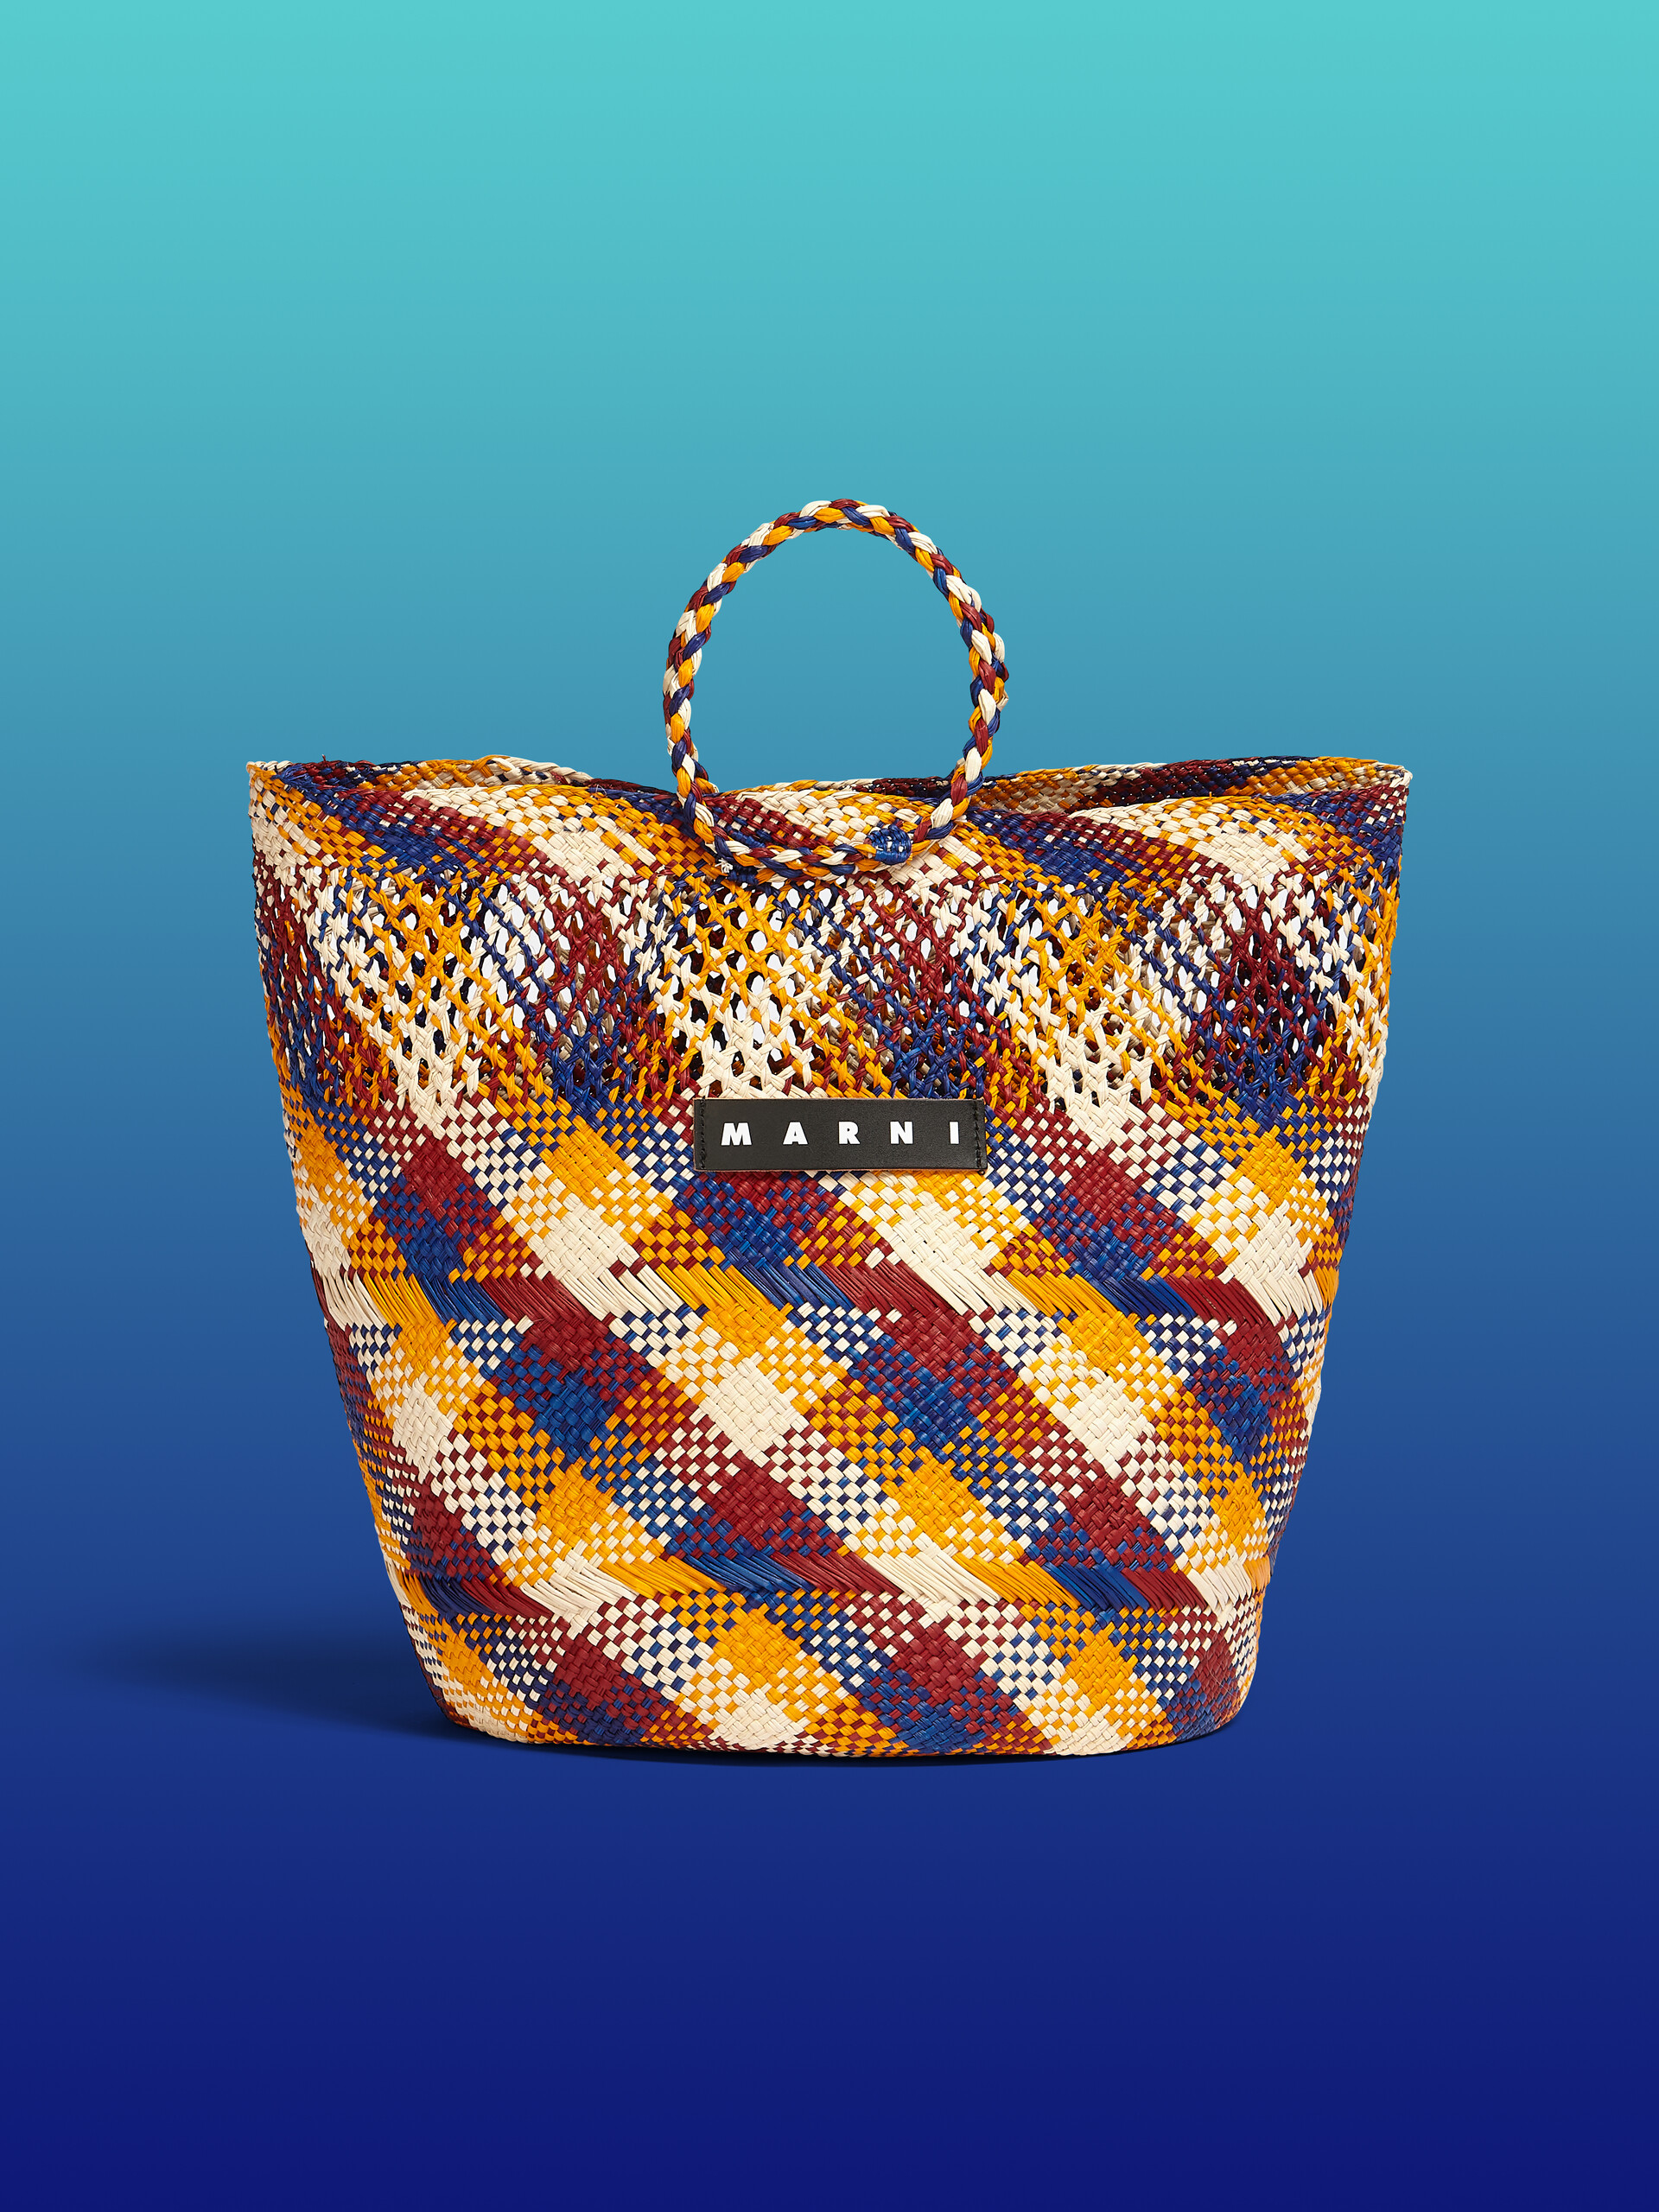 MARNI MARKET TAPIS bag in multicolor natural fiber - Shopping Bags - Image 1